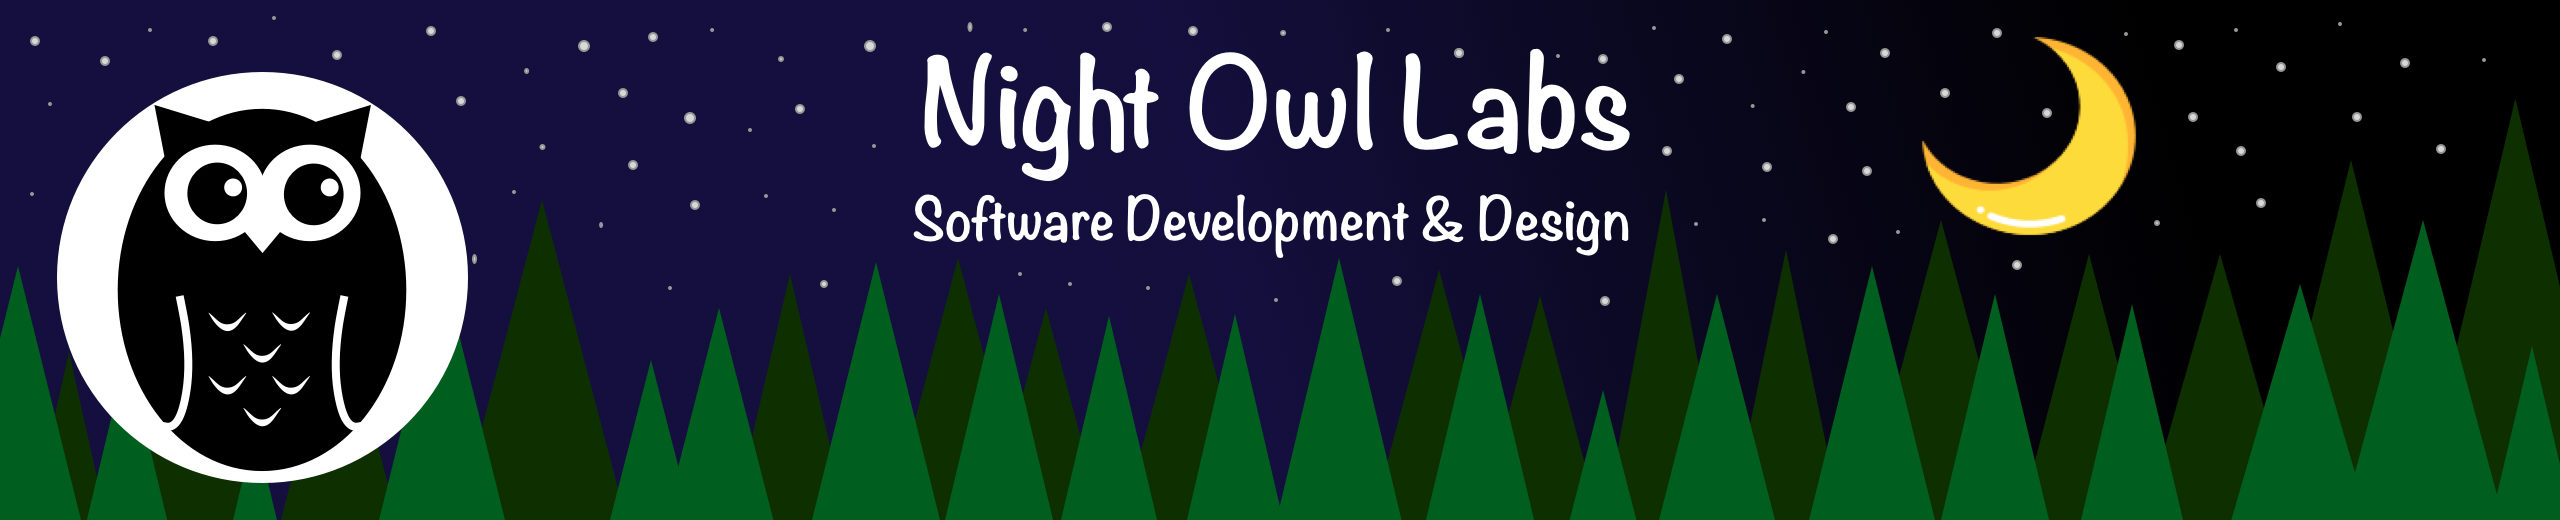 Night Owl Labs